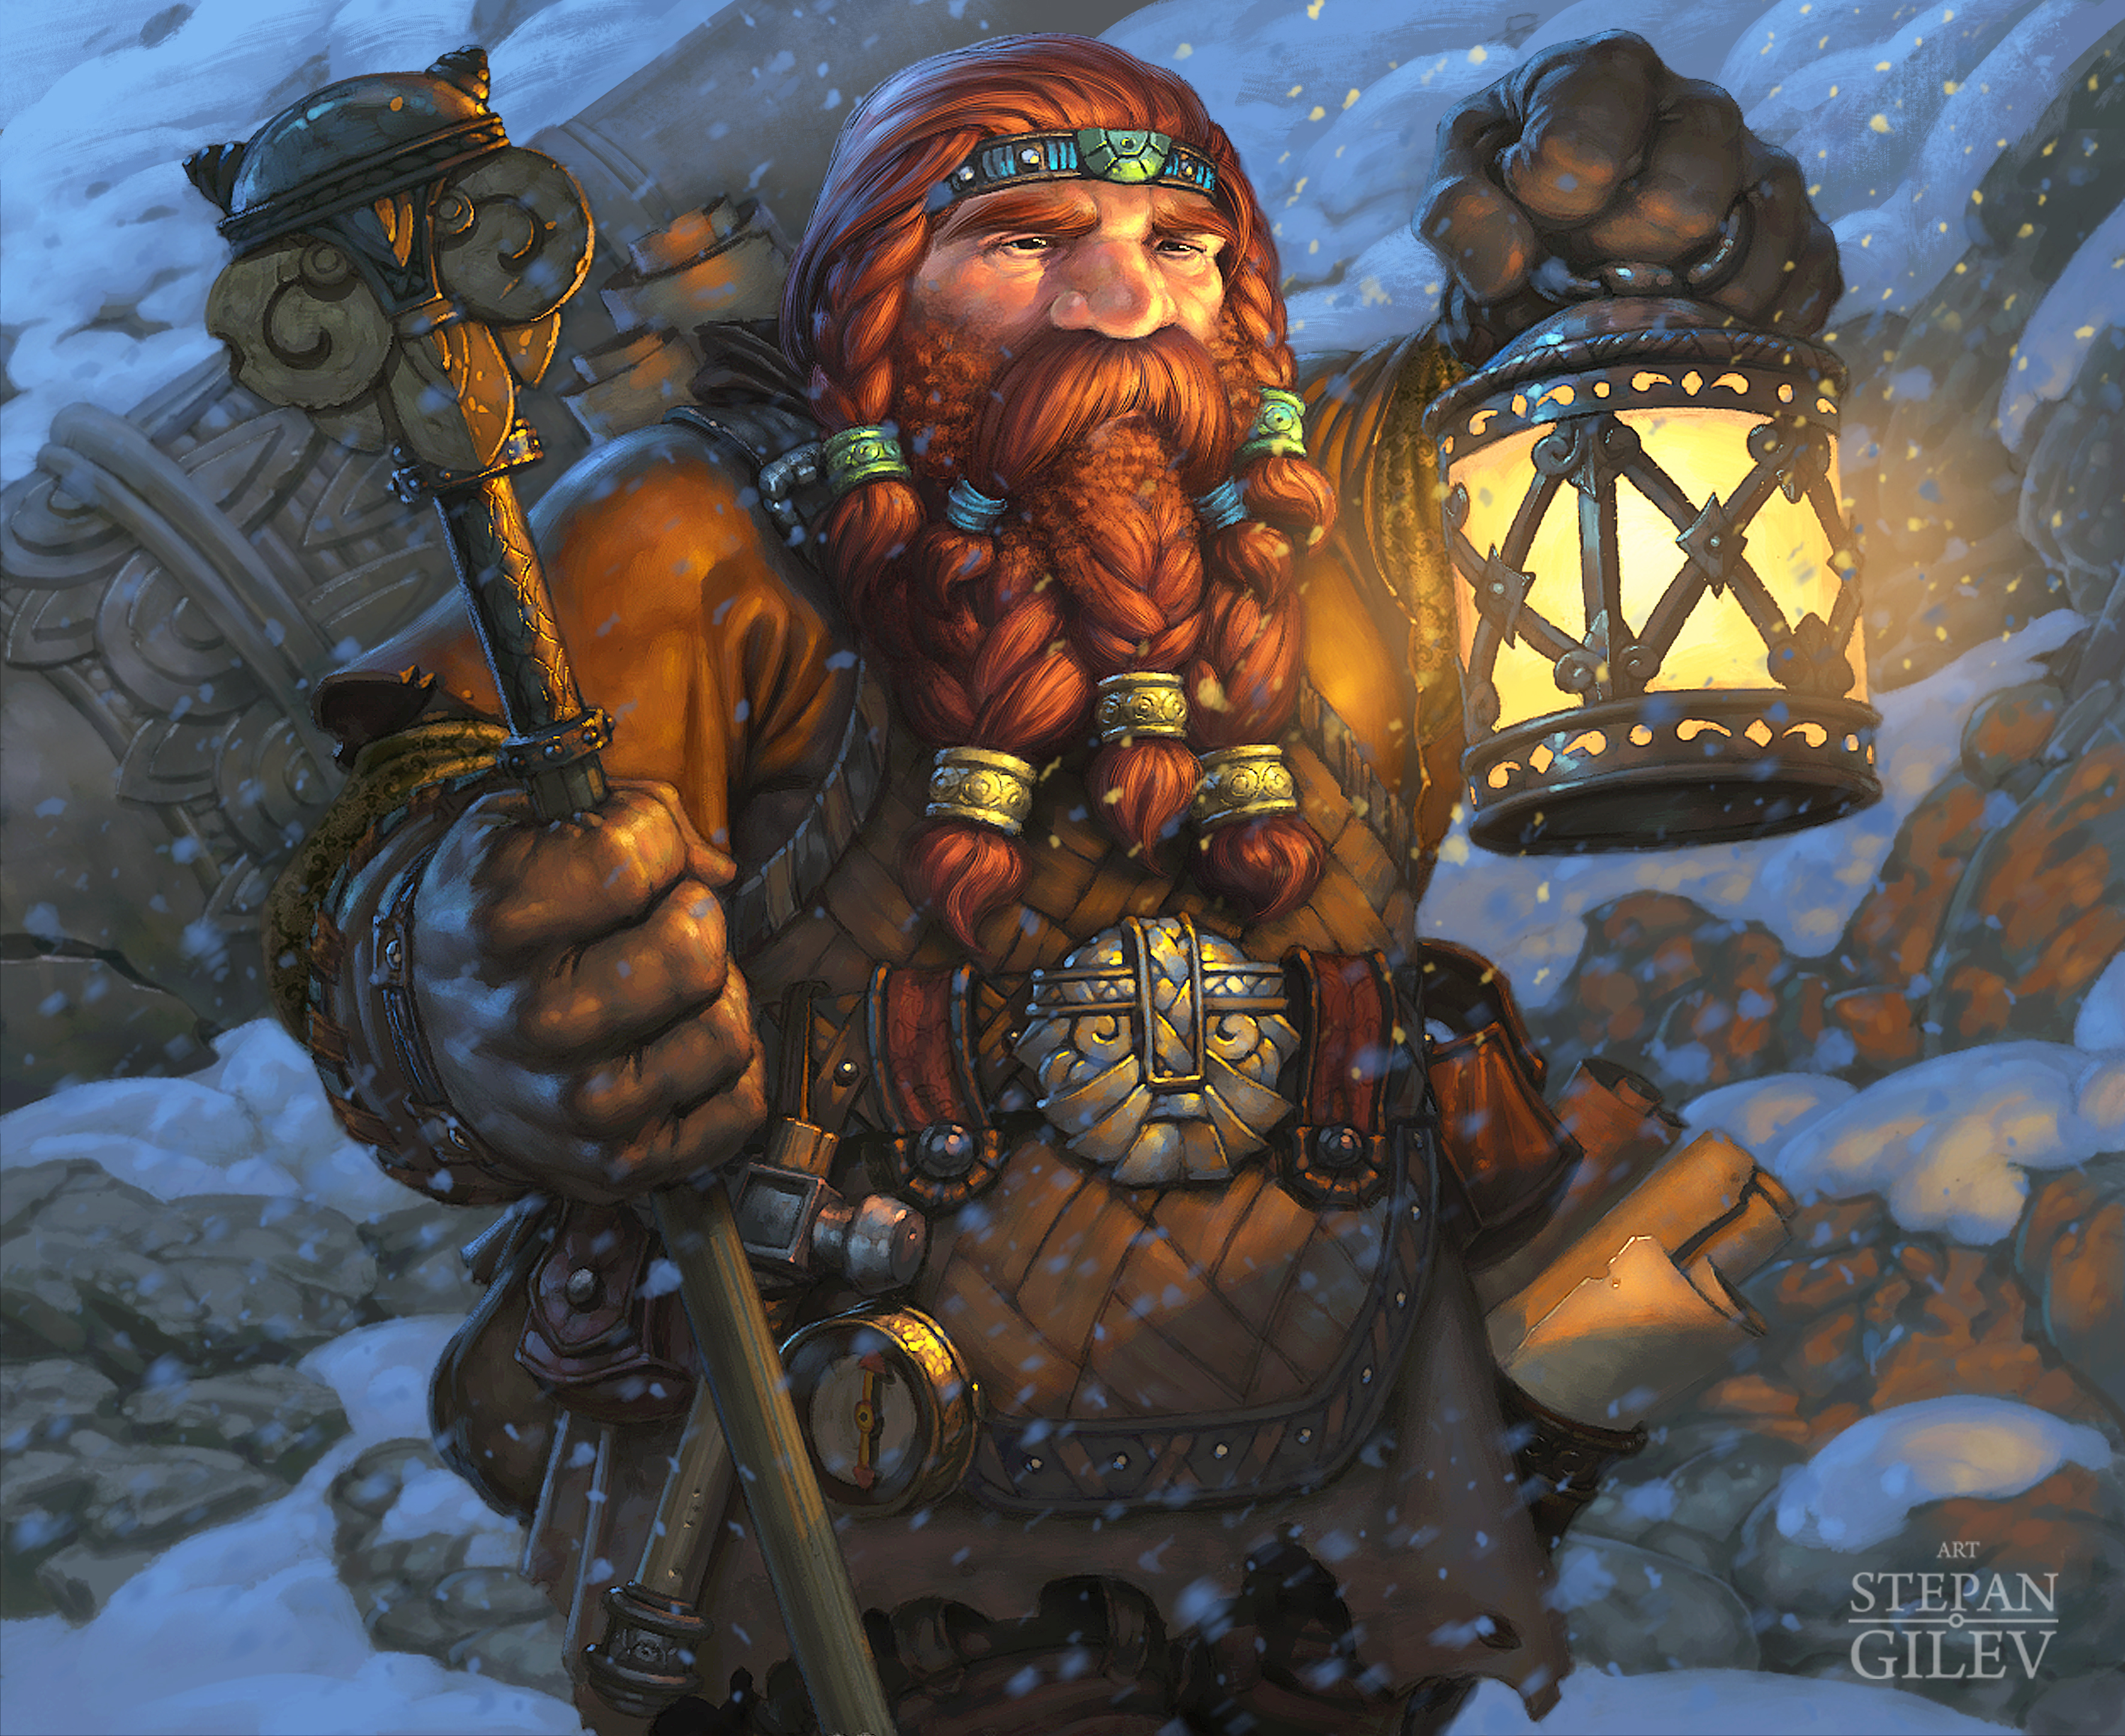  a dwarf with a lantern  art stepan gilev 